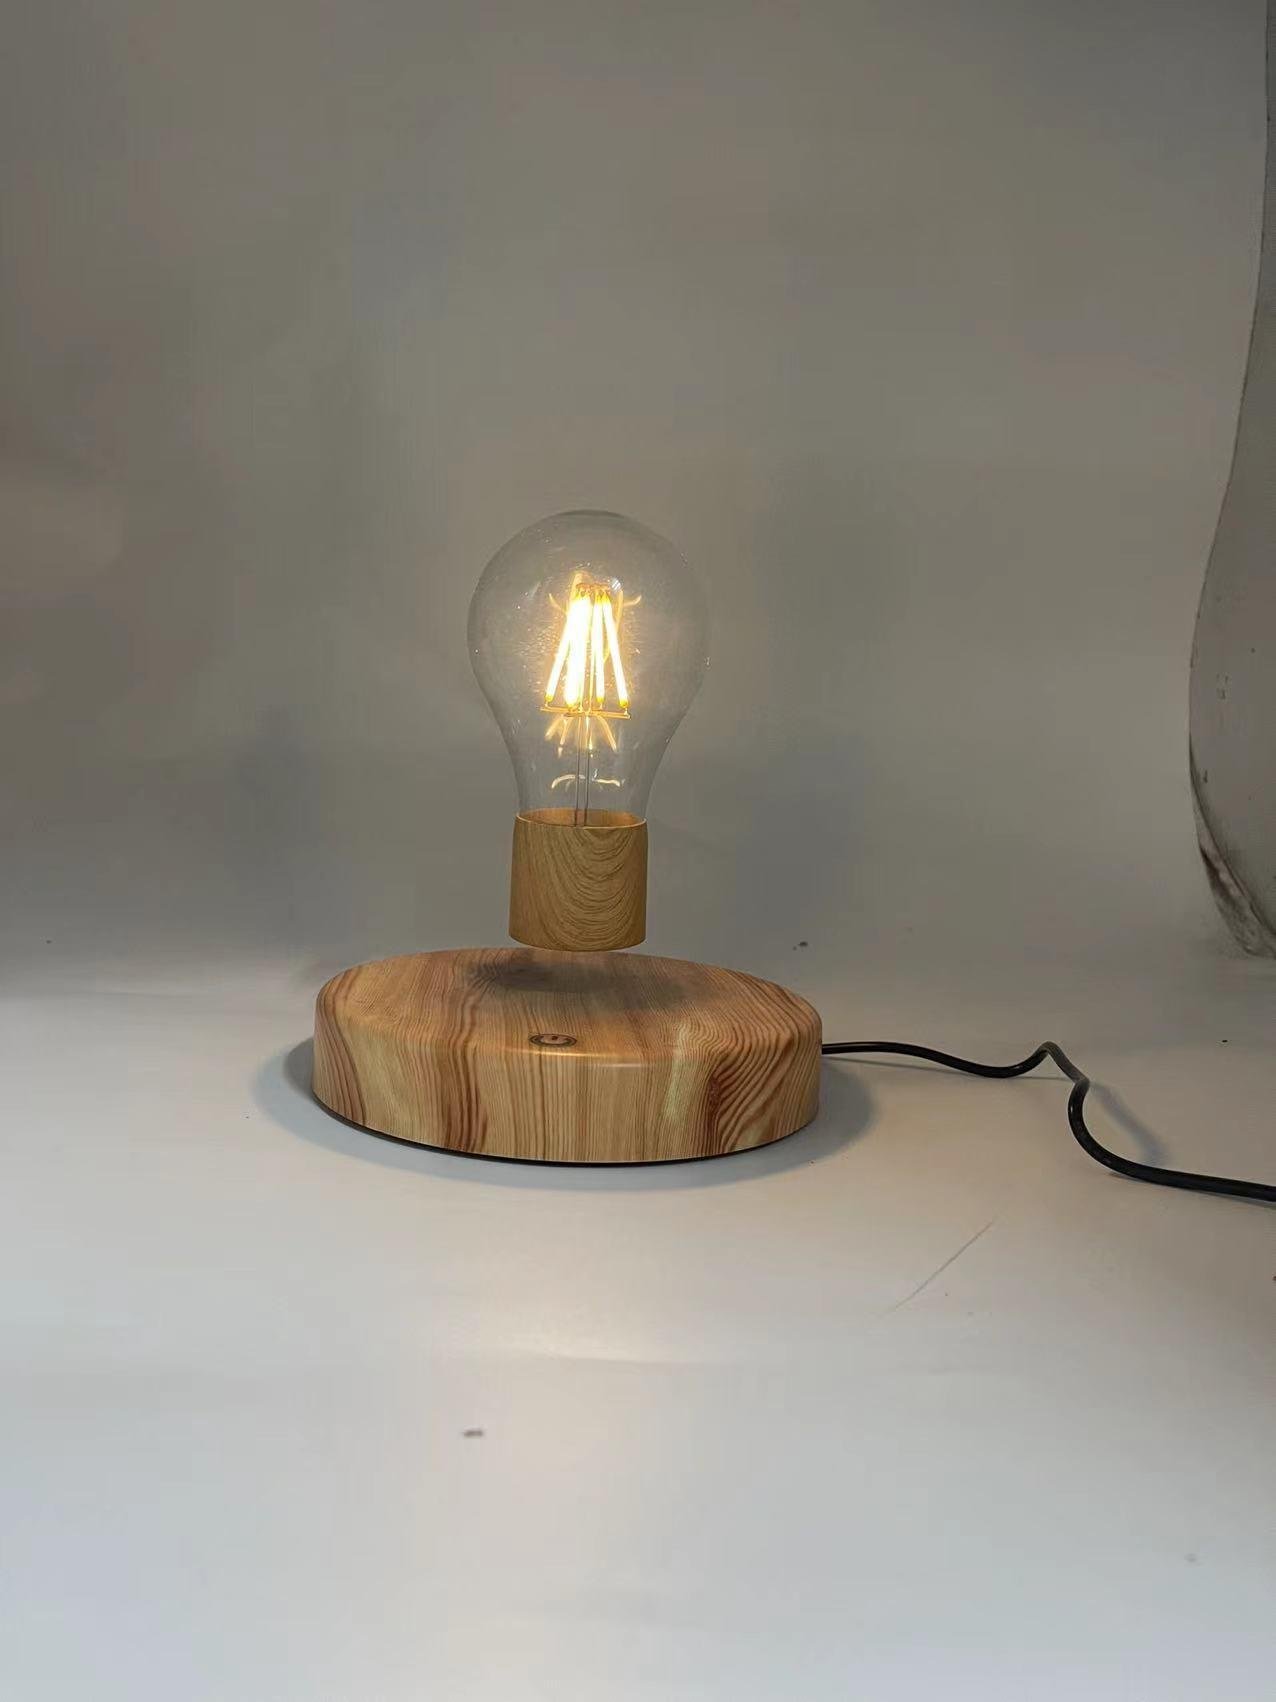 Levitating lamp Magnetic Levitating Lamp Floating Led Light Bulb Home Decor Gift 2